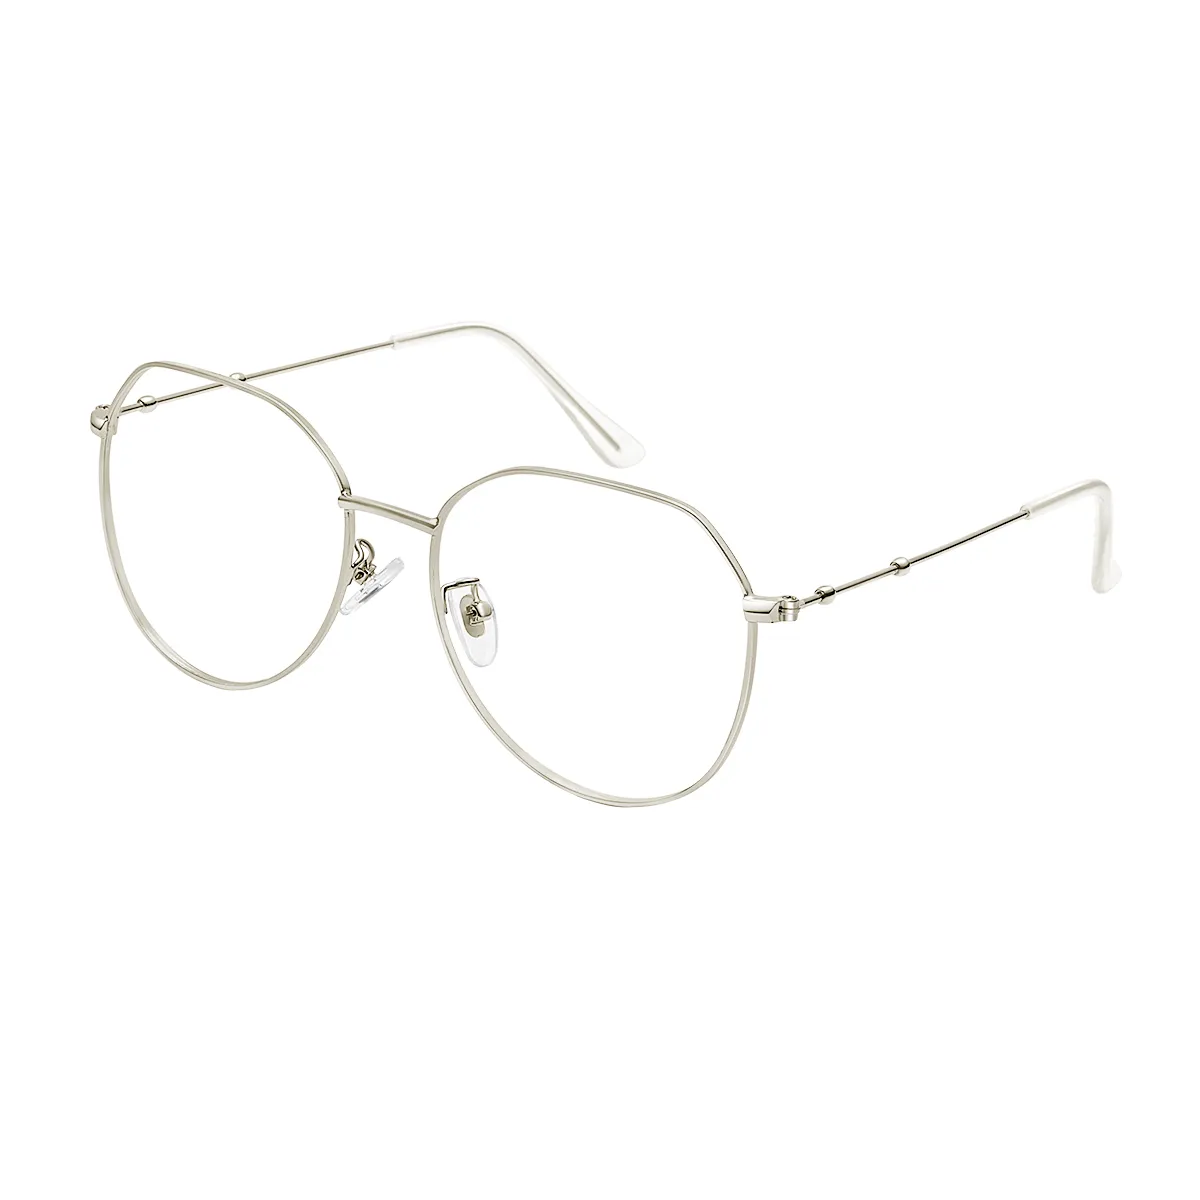 Fashion Aviator Silver Glasses for Men & Women